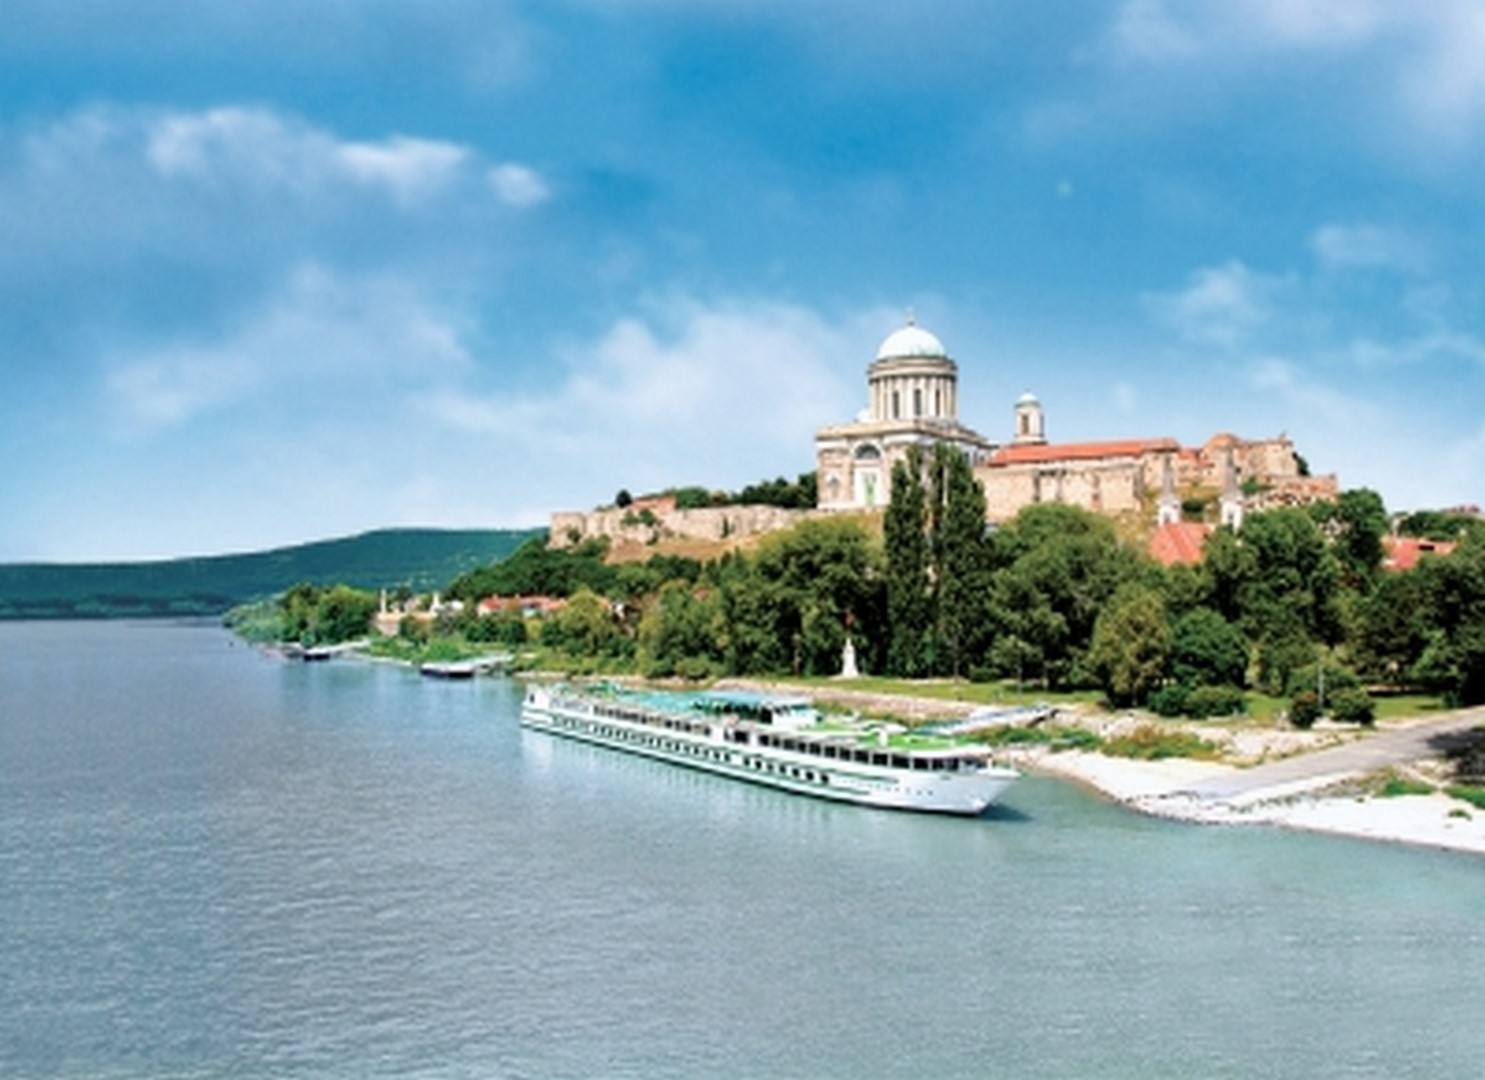 le beau Danube bleu